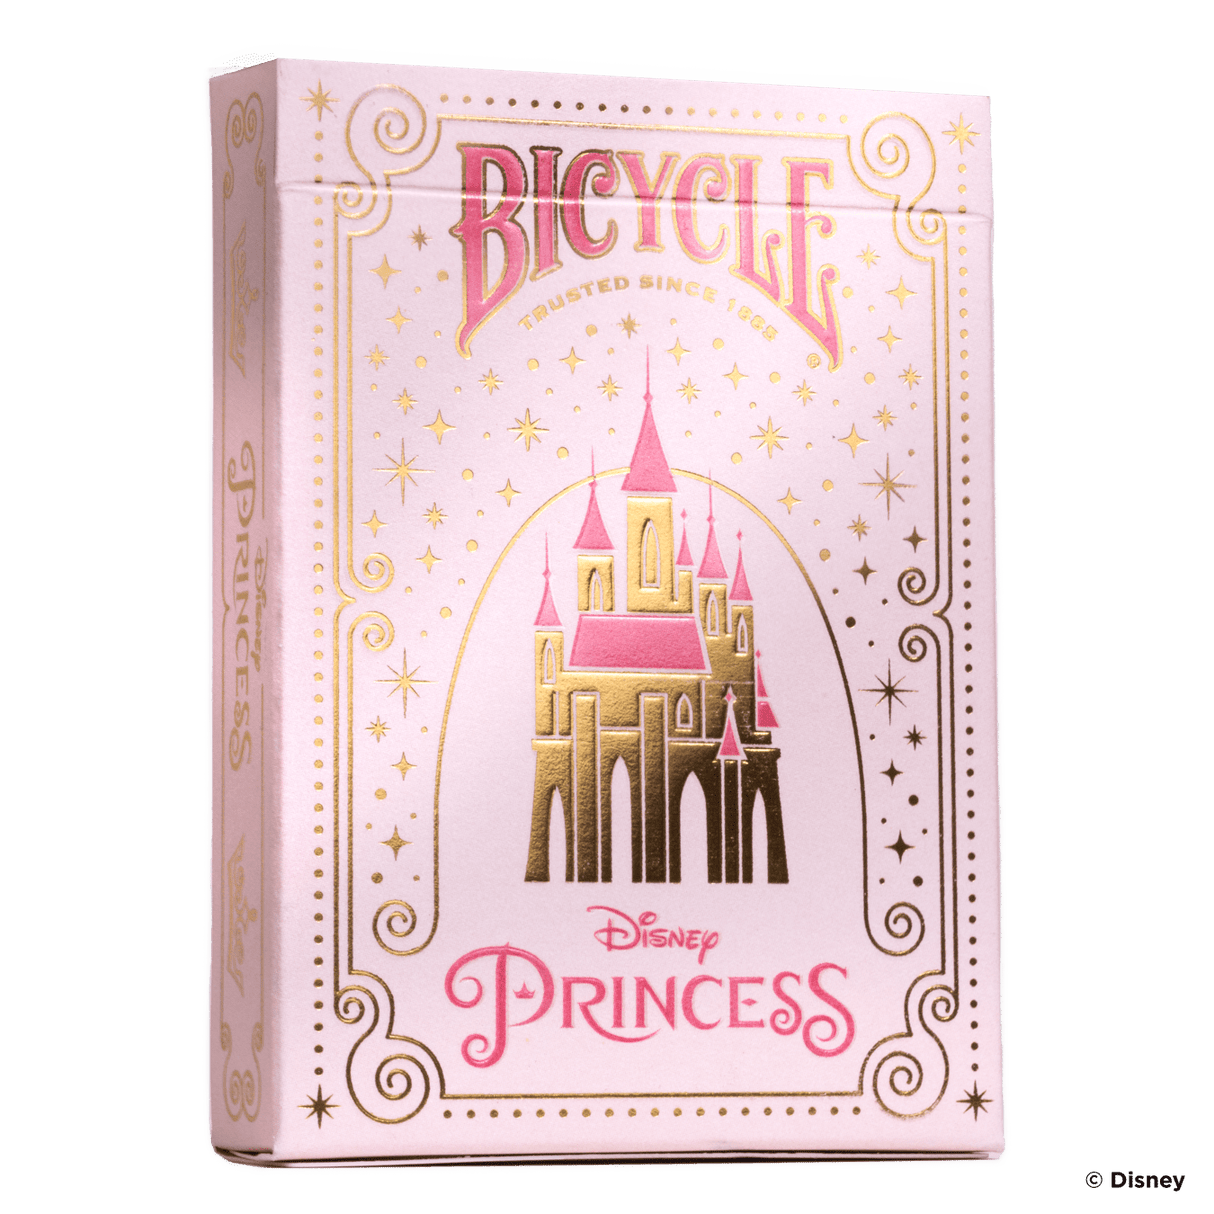 Bicycle Disney Princess Inspired Playing Cards - Pink